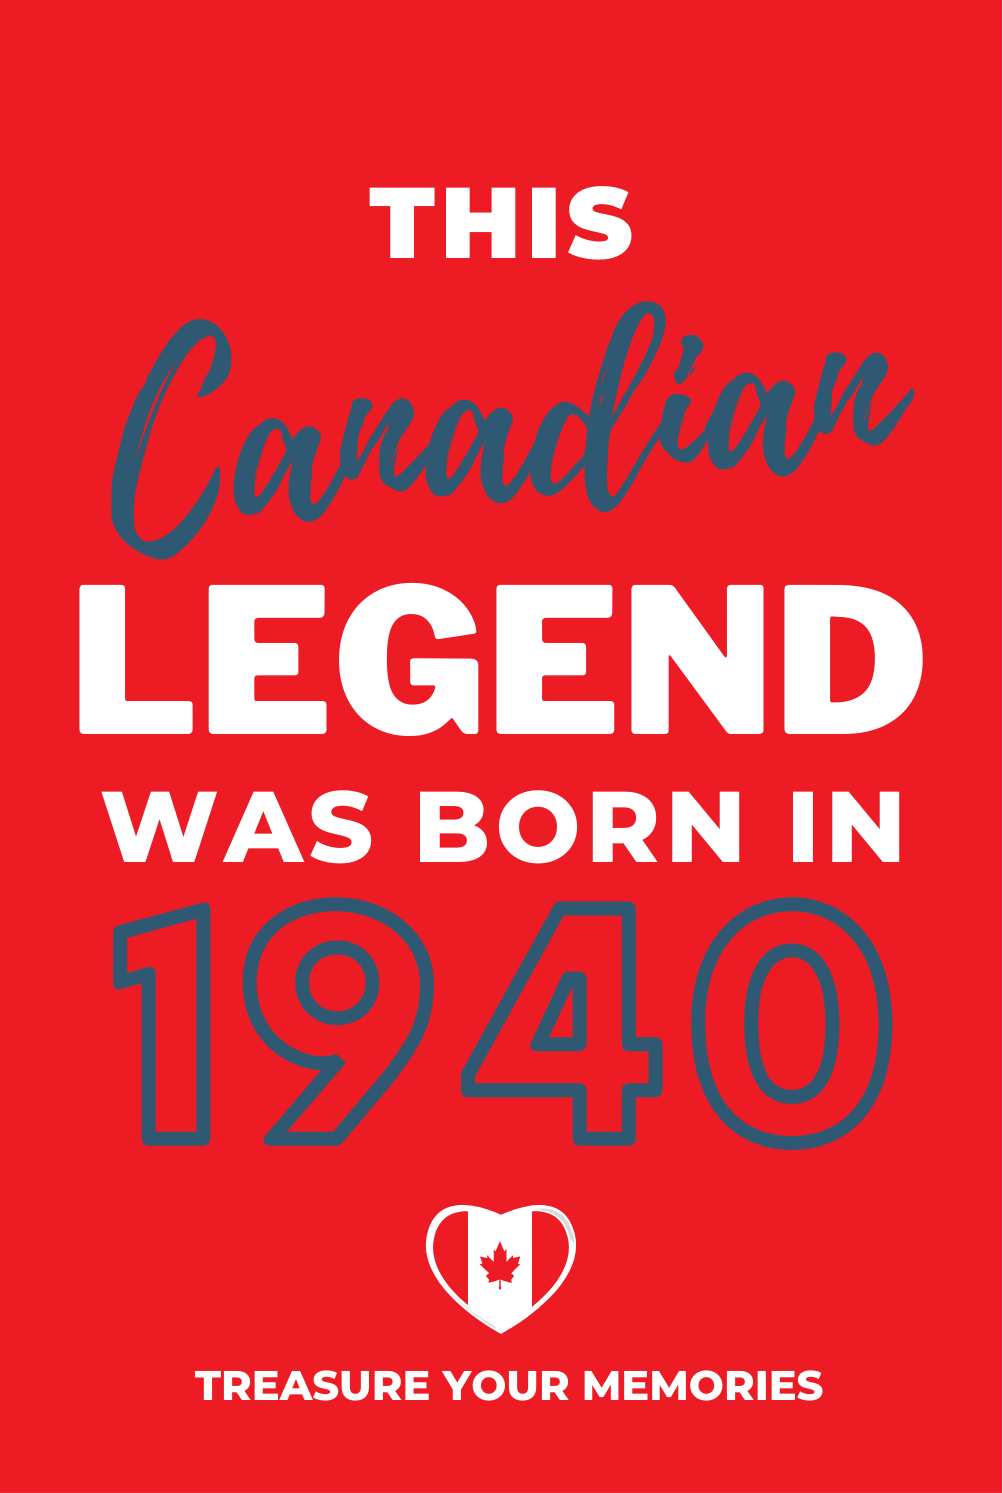 1940 Canadian Legend